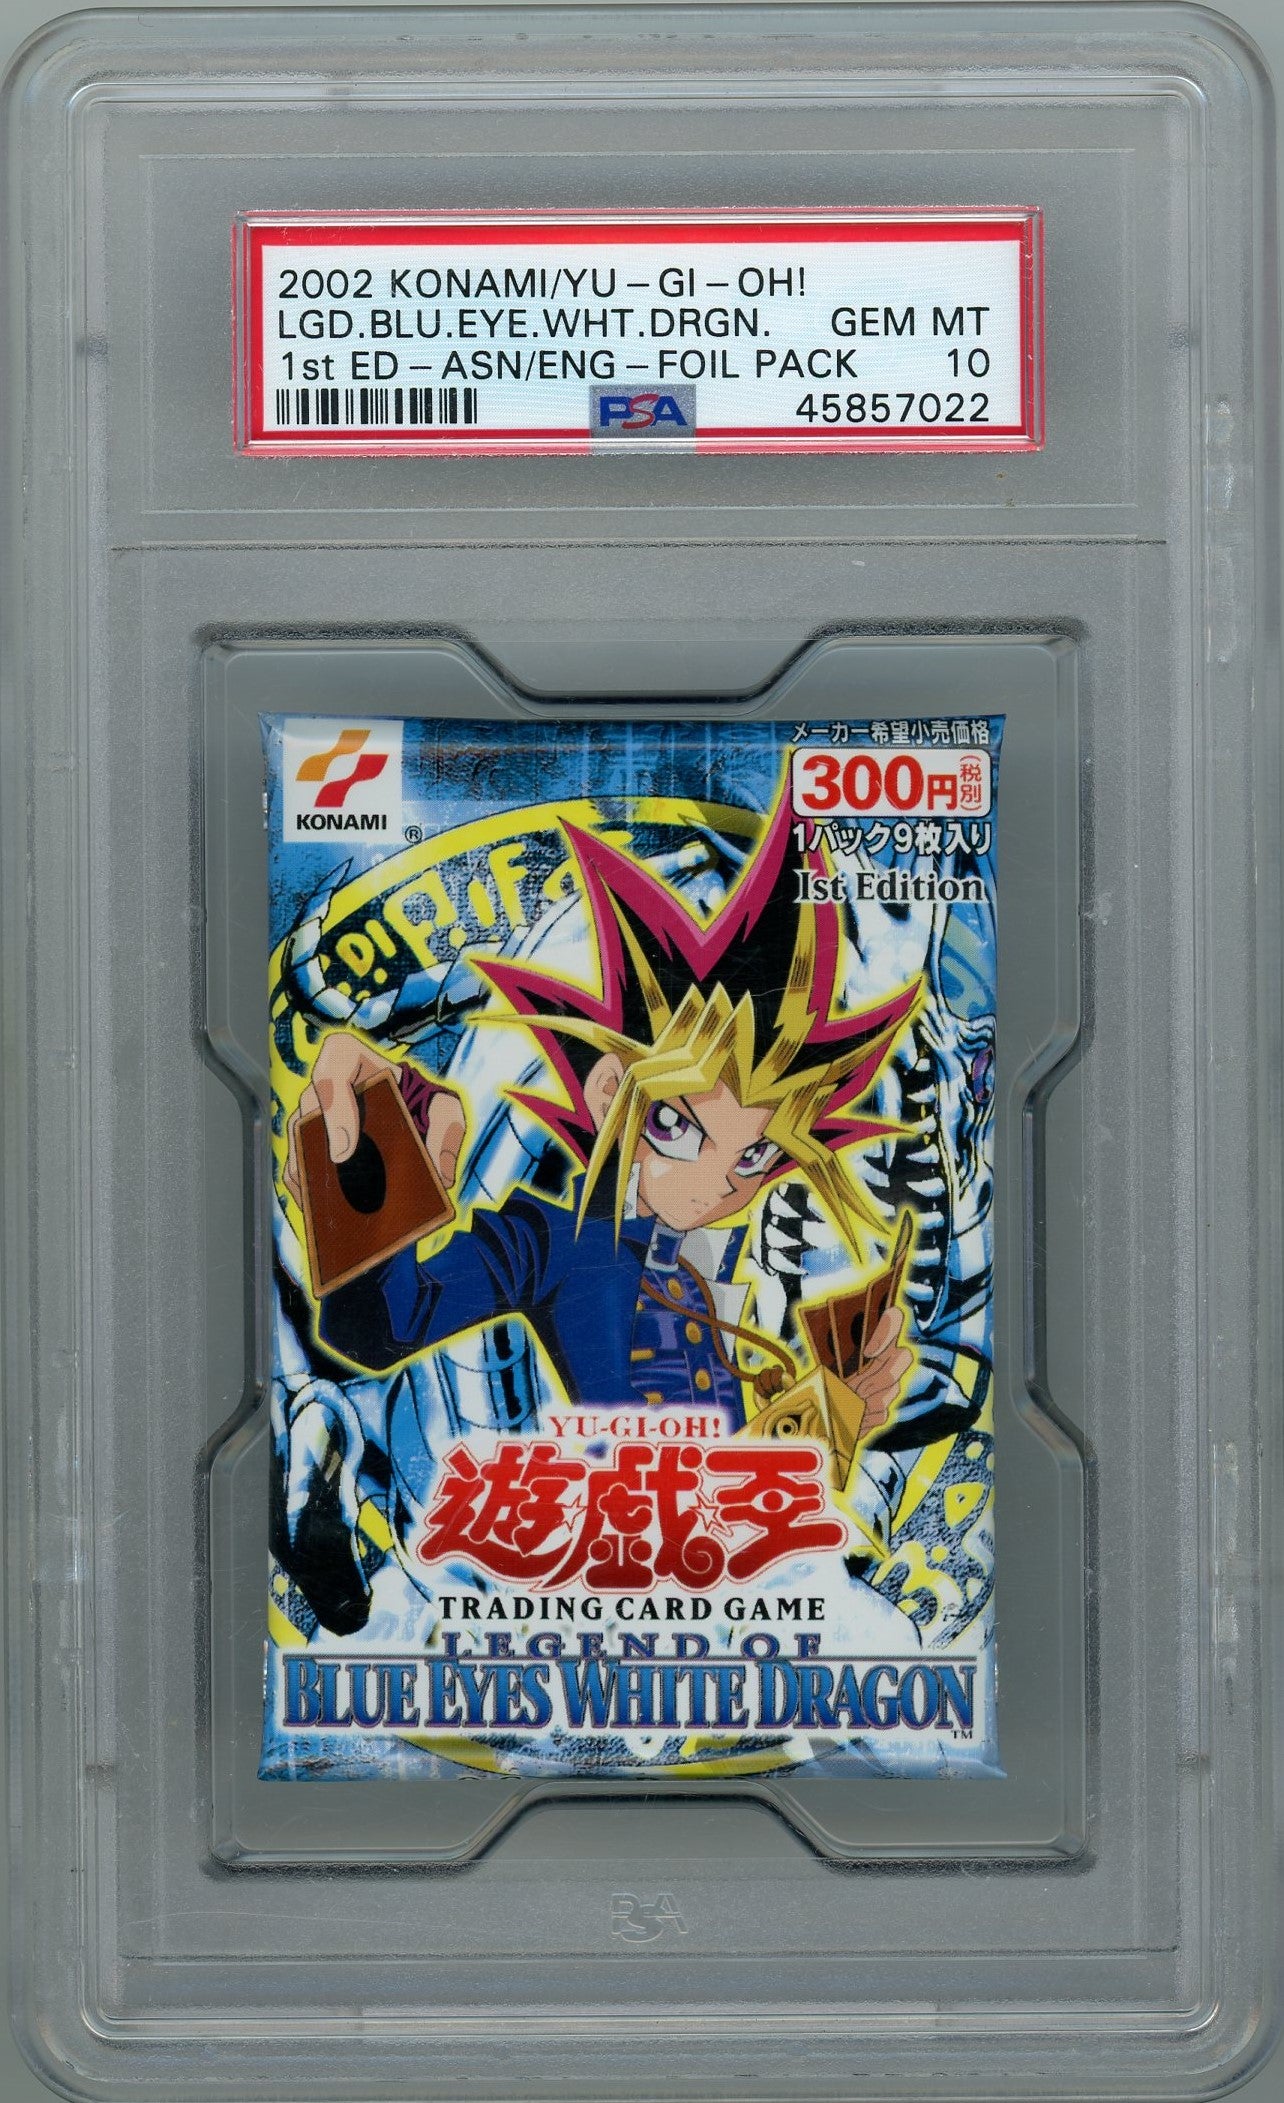 PSA 10 Blue eyes white dragon booster pack encapsulated // 2002 Konami Yugioh 1st edition Asian english foil pack